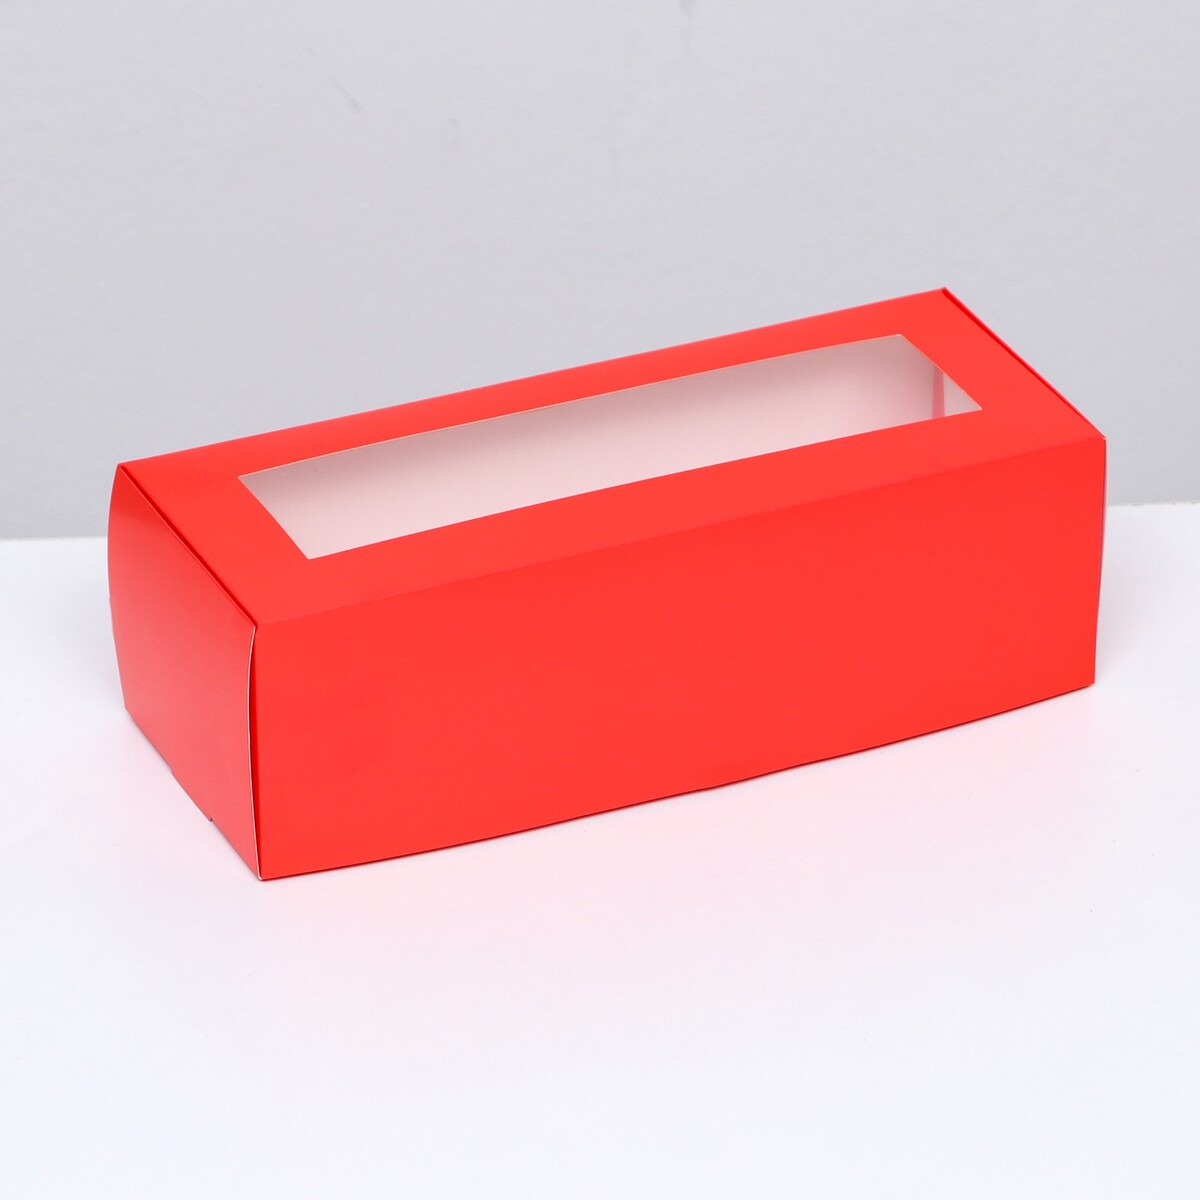 Коробка складная с окном под рулет, красная, 26 х 10 х 8 см коробка складная красная 21 х 15 х 5 см